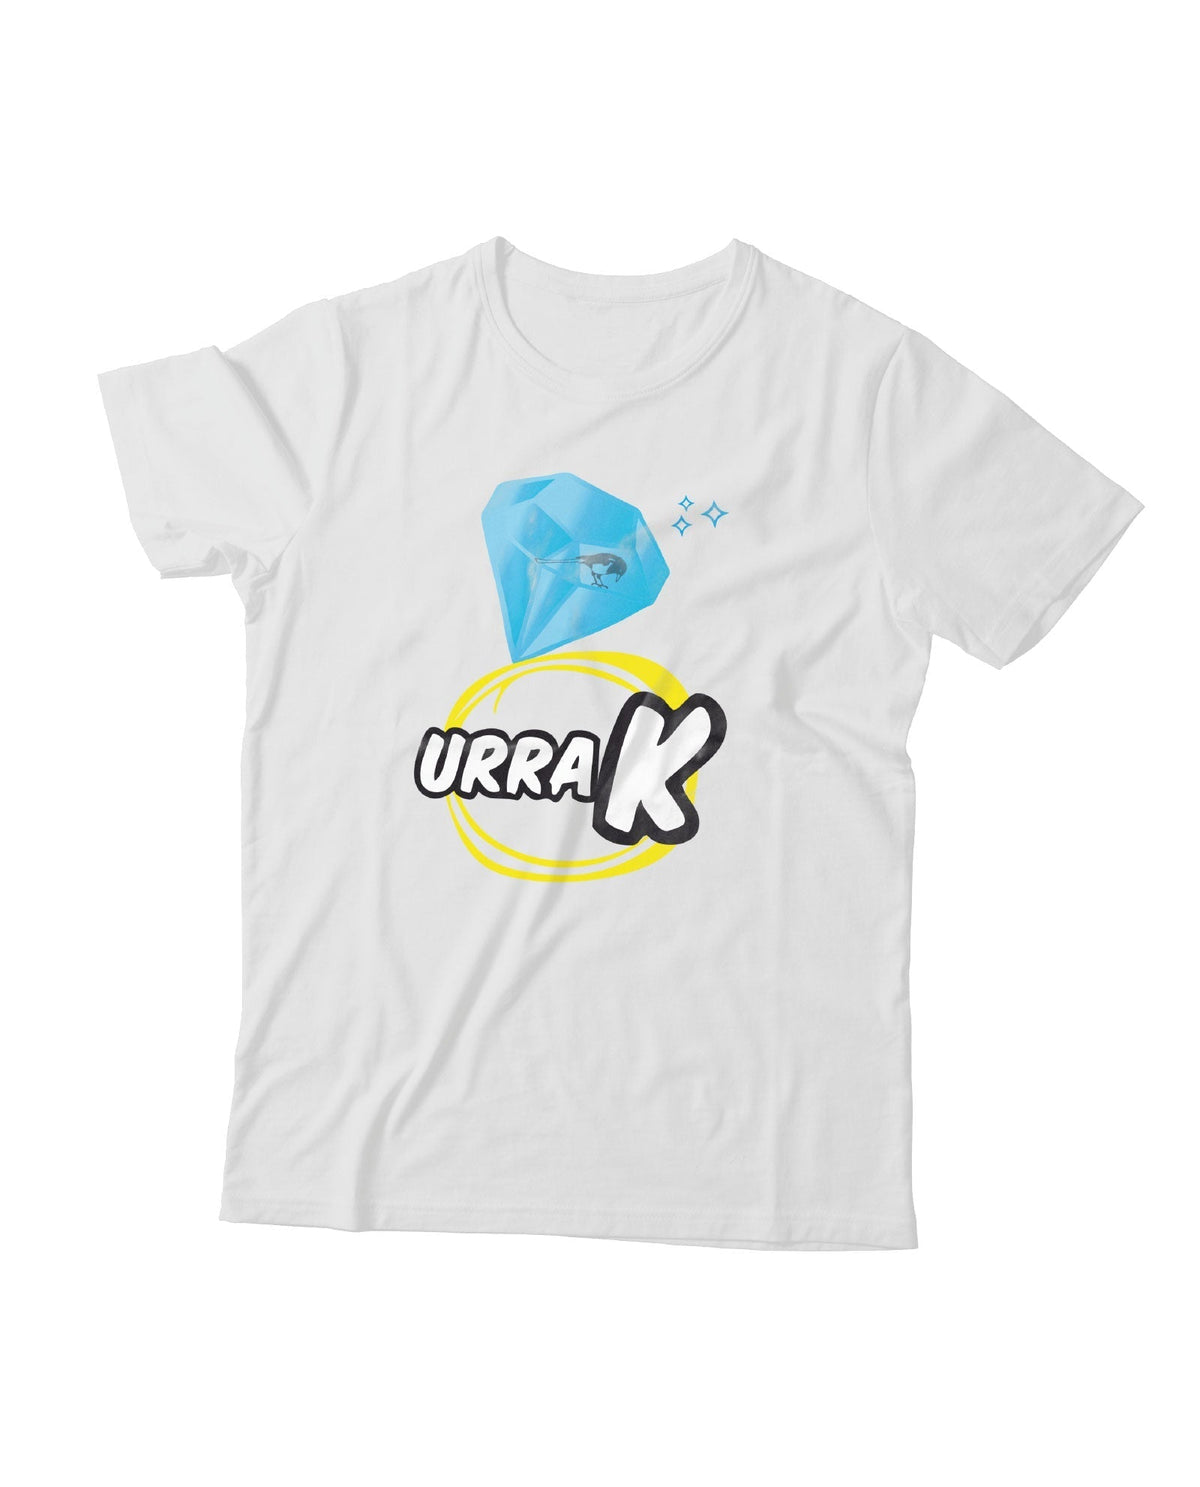 Camiseta URRAK Anillo - Blanco - D2fy · Rocktud - Urrak